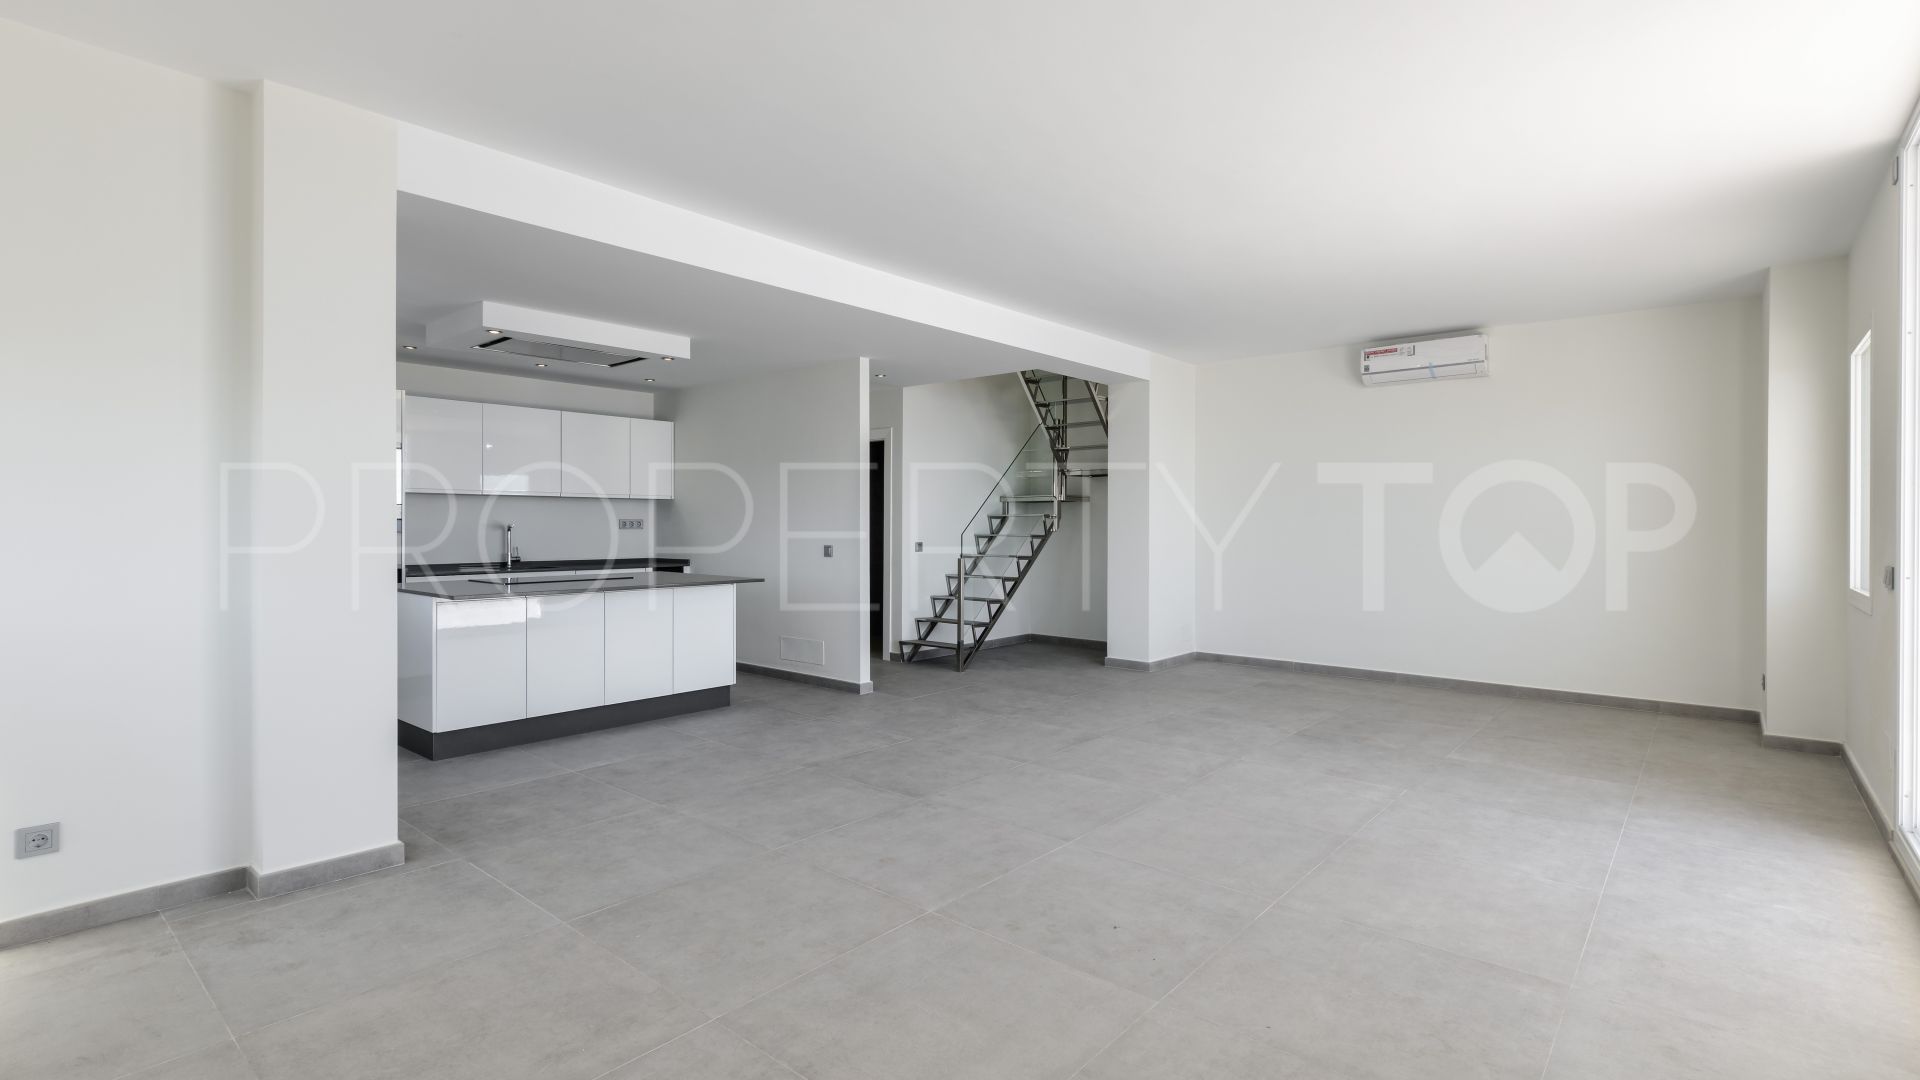 3 bedrooms duplex penthouse in Estepona for sale